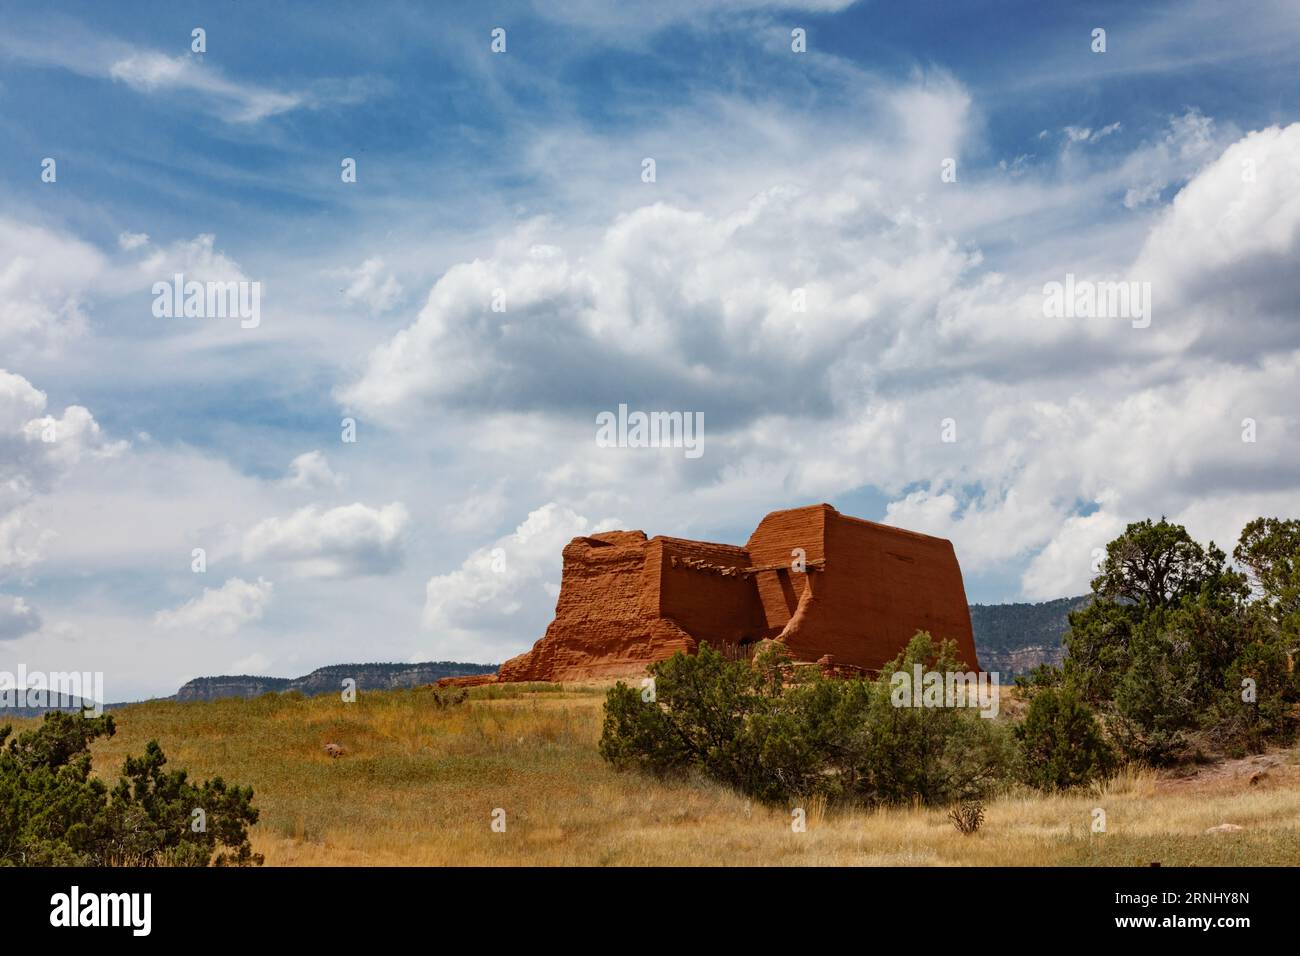 The Pecos National Hisorical park contains the historic Pecos Pueblo - New Mexico Stock Photo